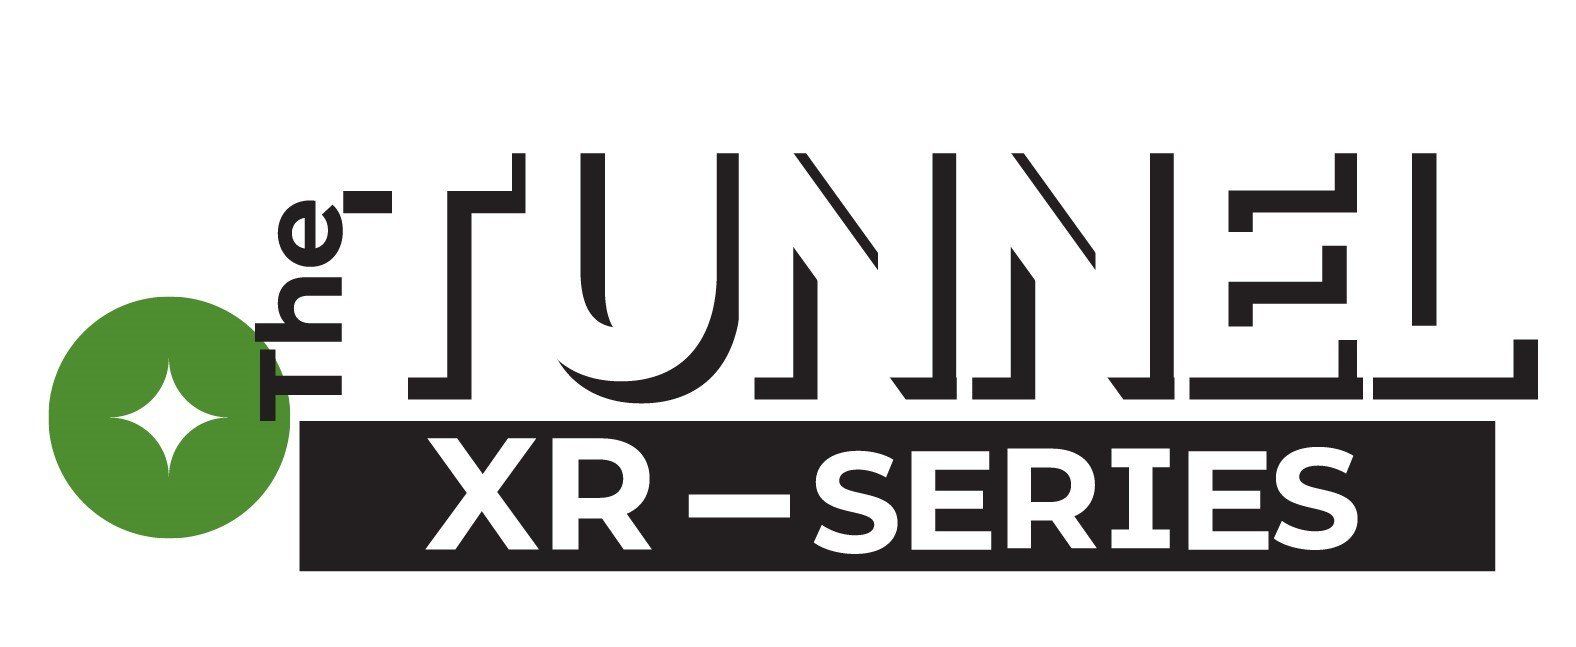 petit xr series tunnel car wash equipment logo